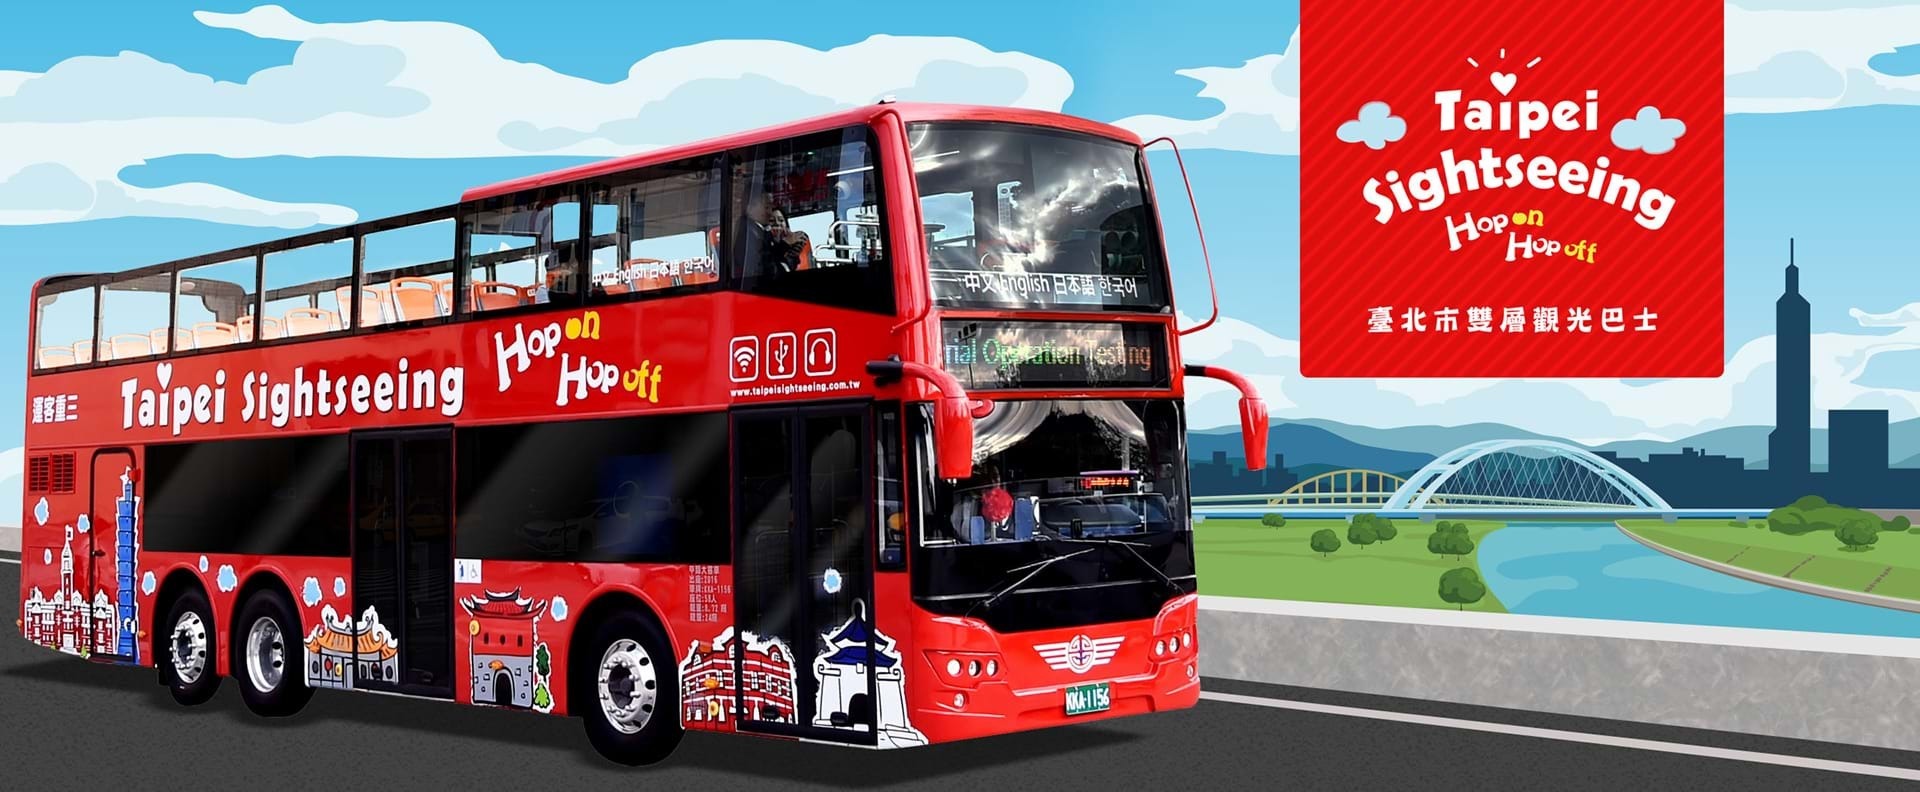 Taipei Double Decker Bus